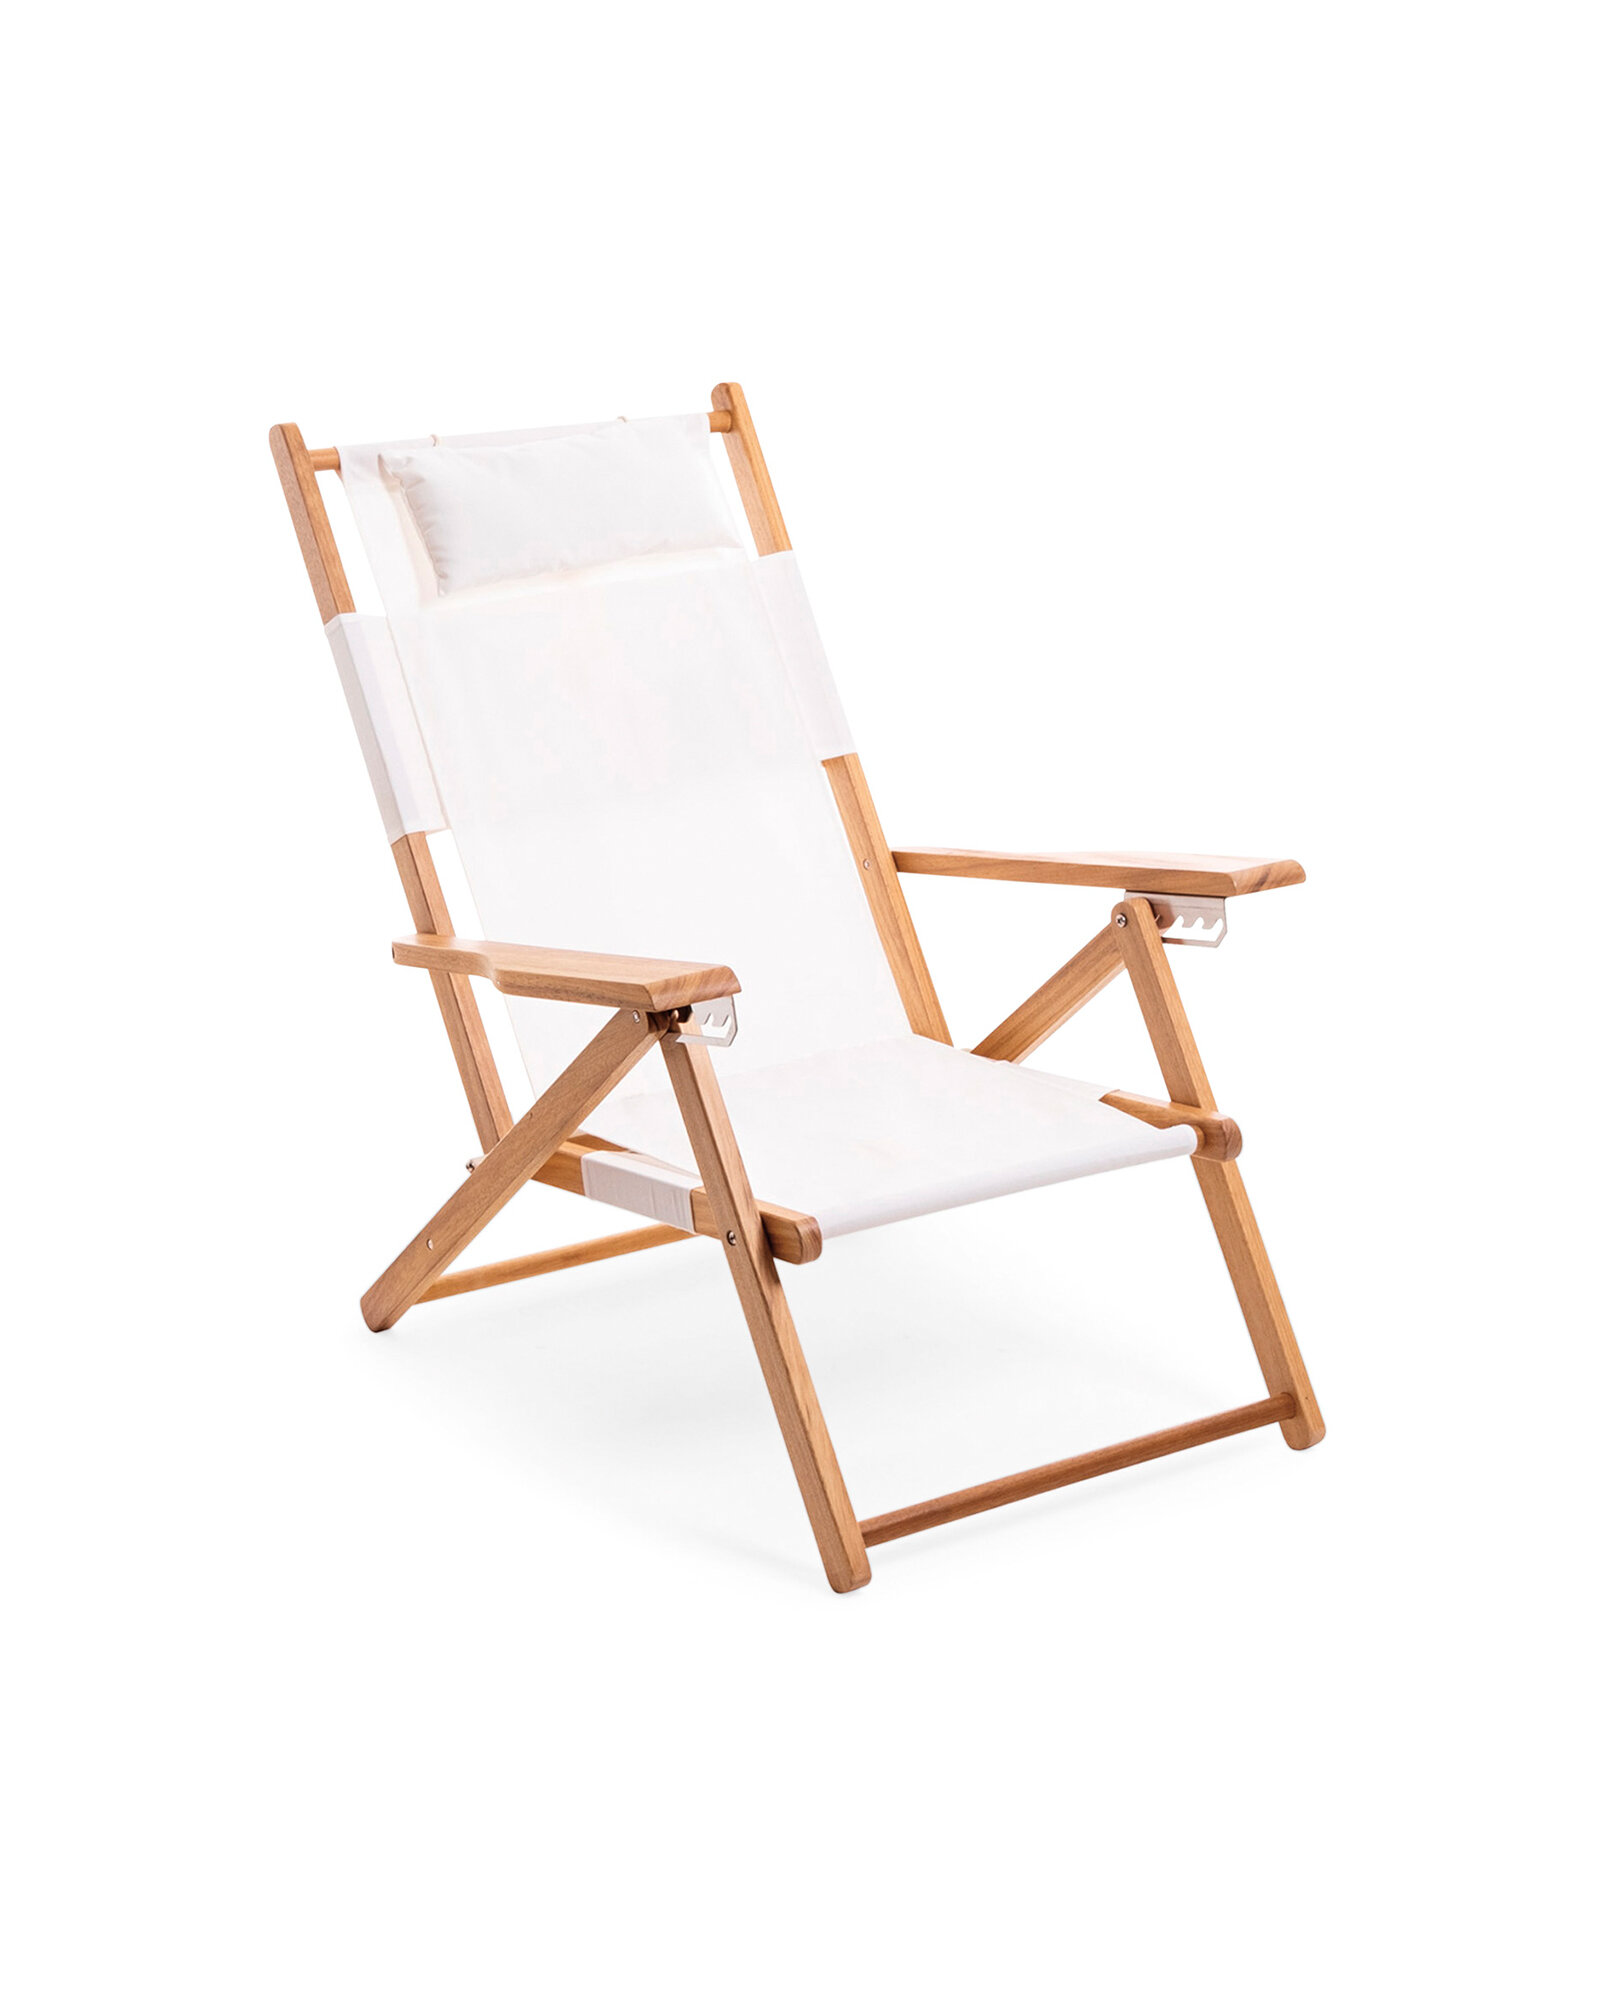 Teak Beach Chair - Serena and Lily.jpeg